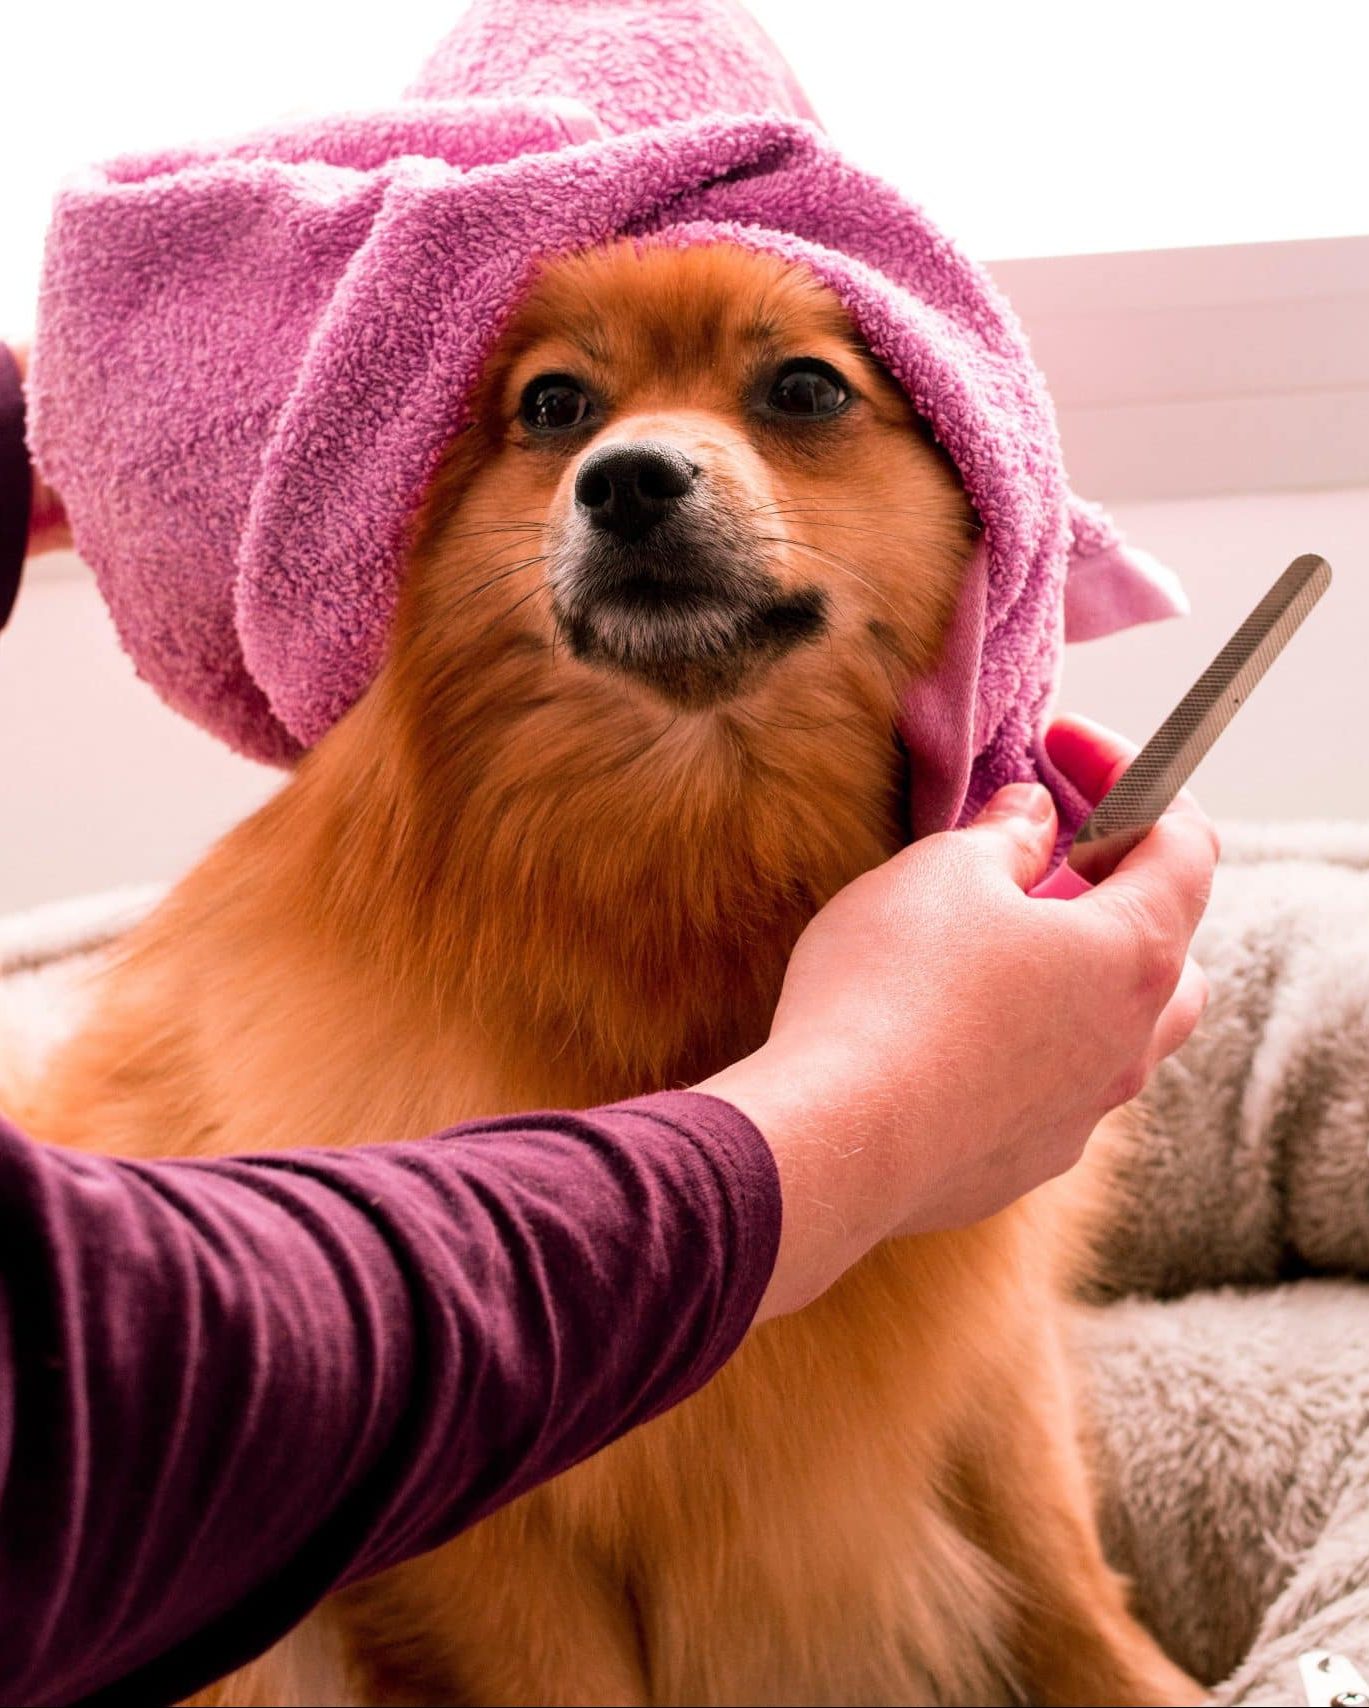 A groomer drying a dog's hair.